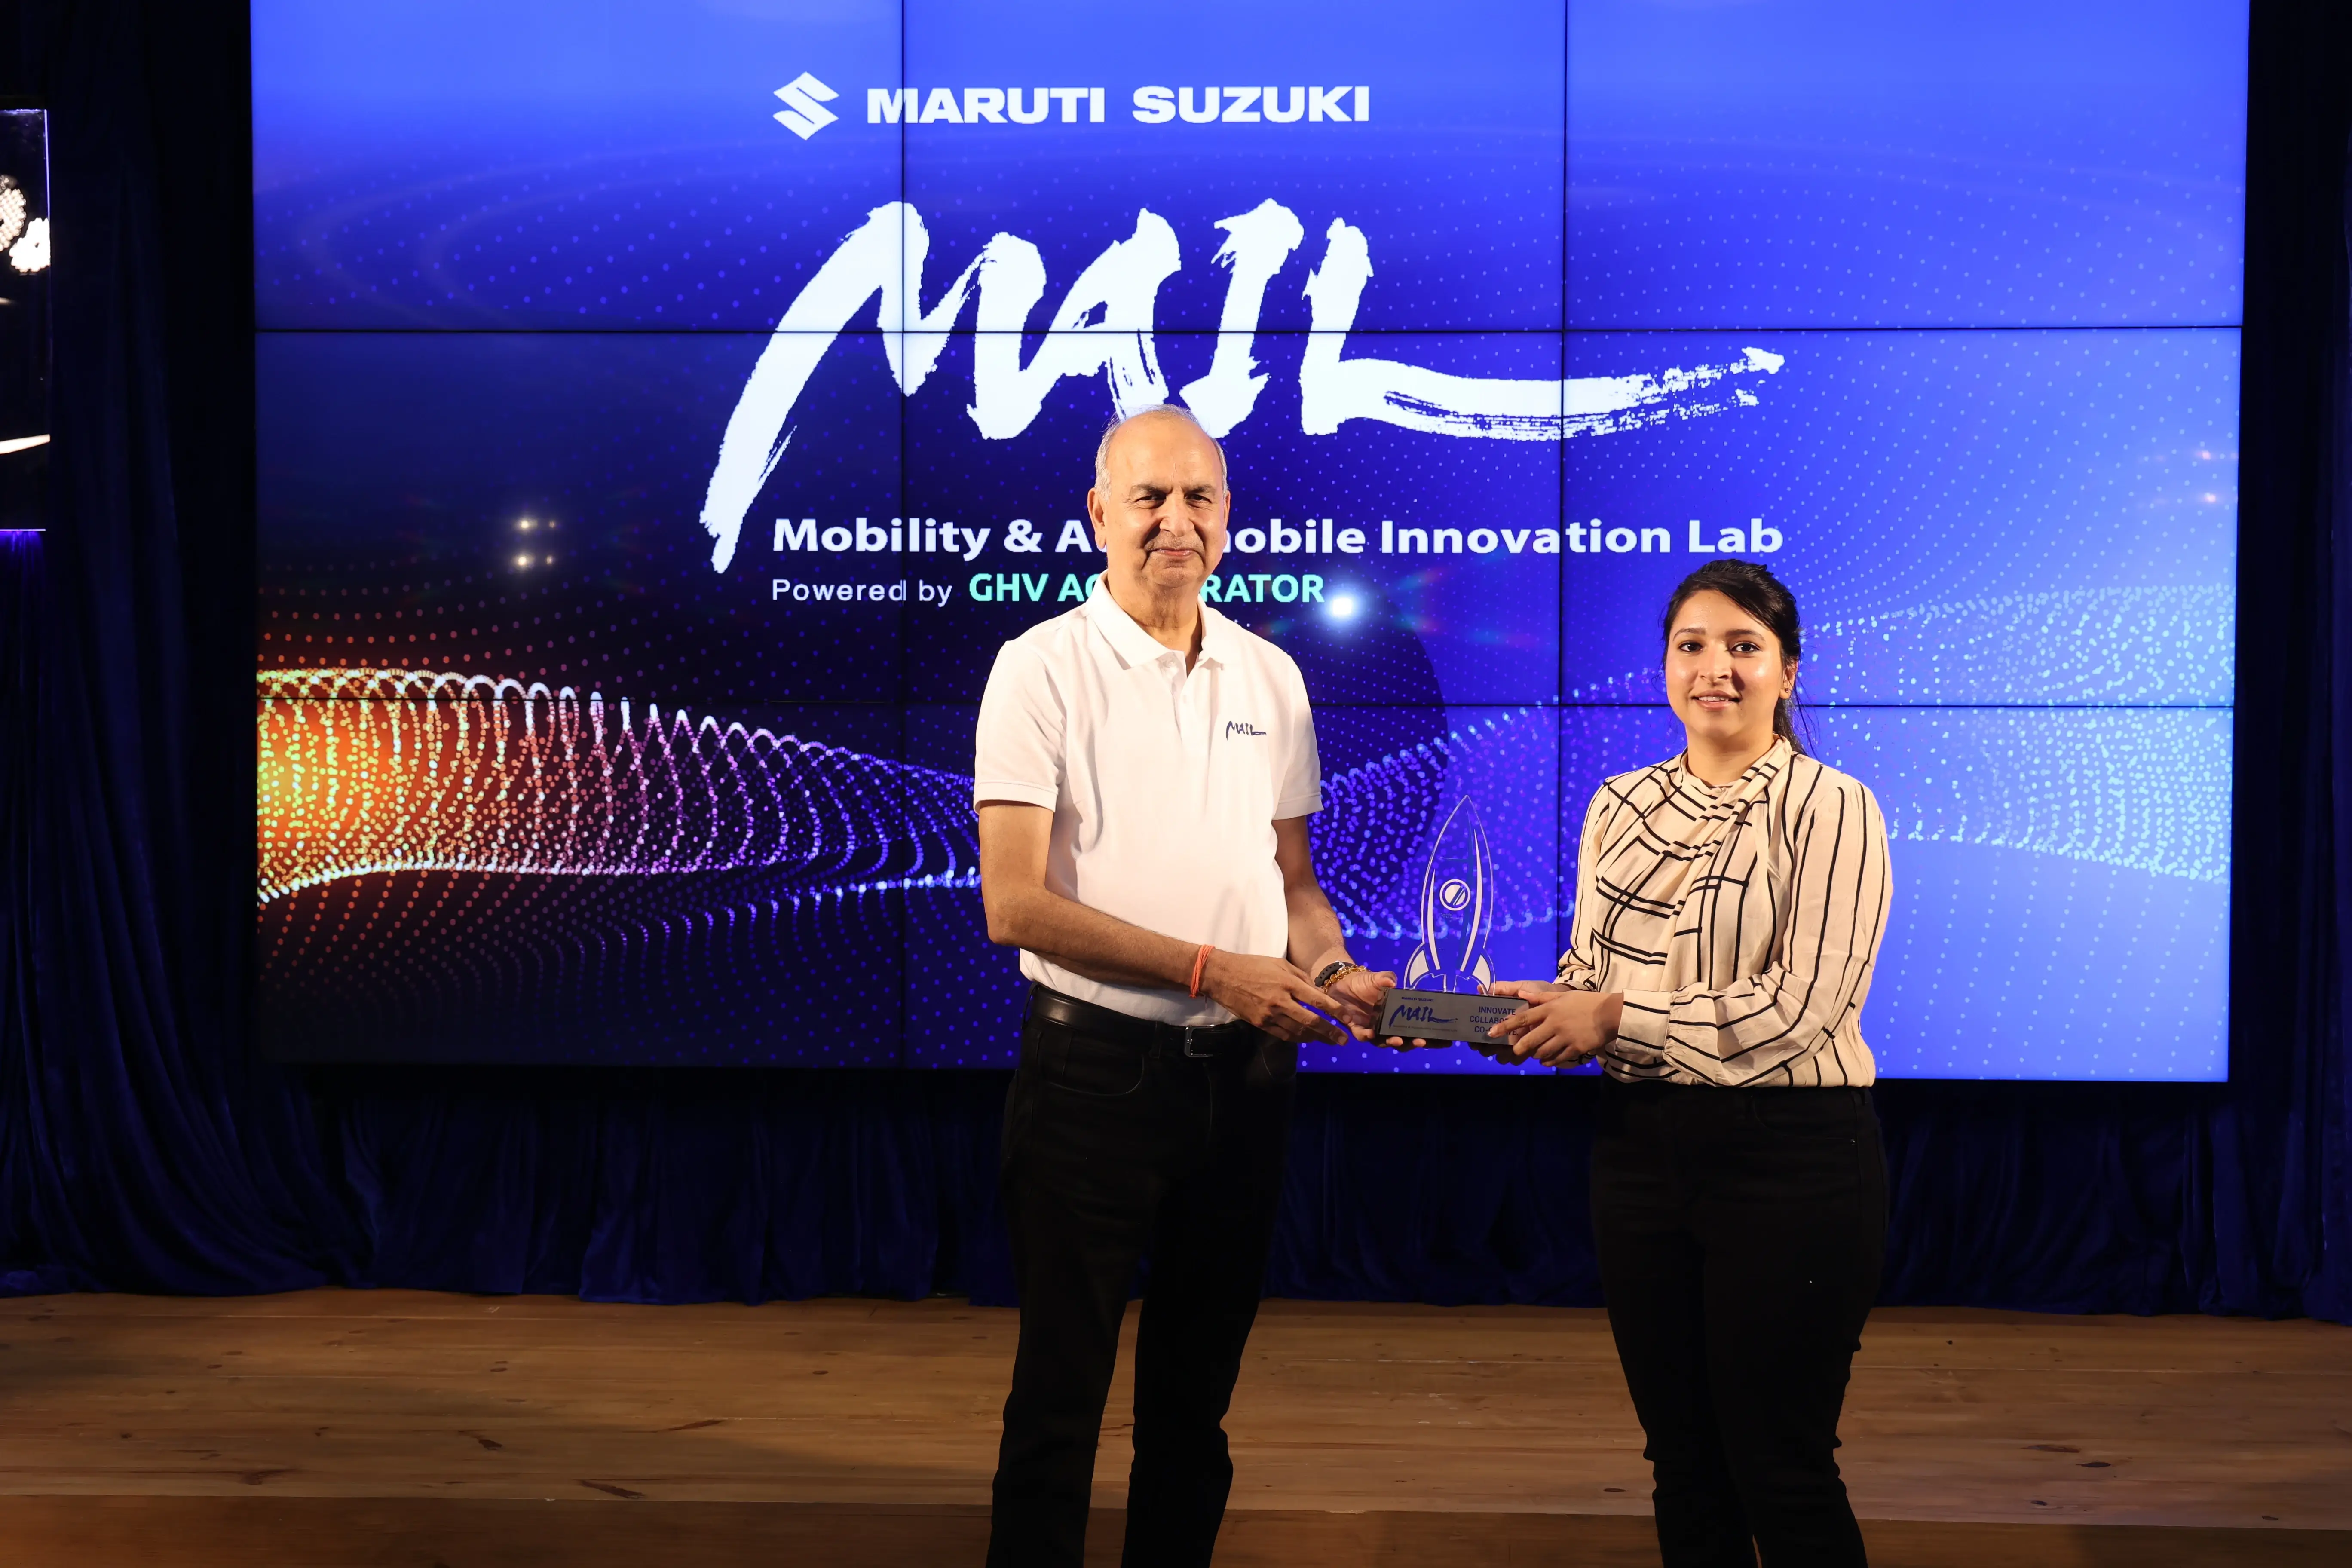 Award- Maruti Suzuki Innovation